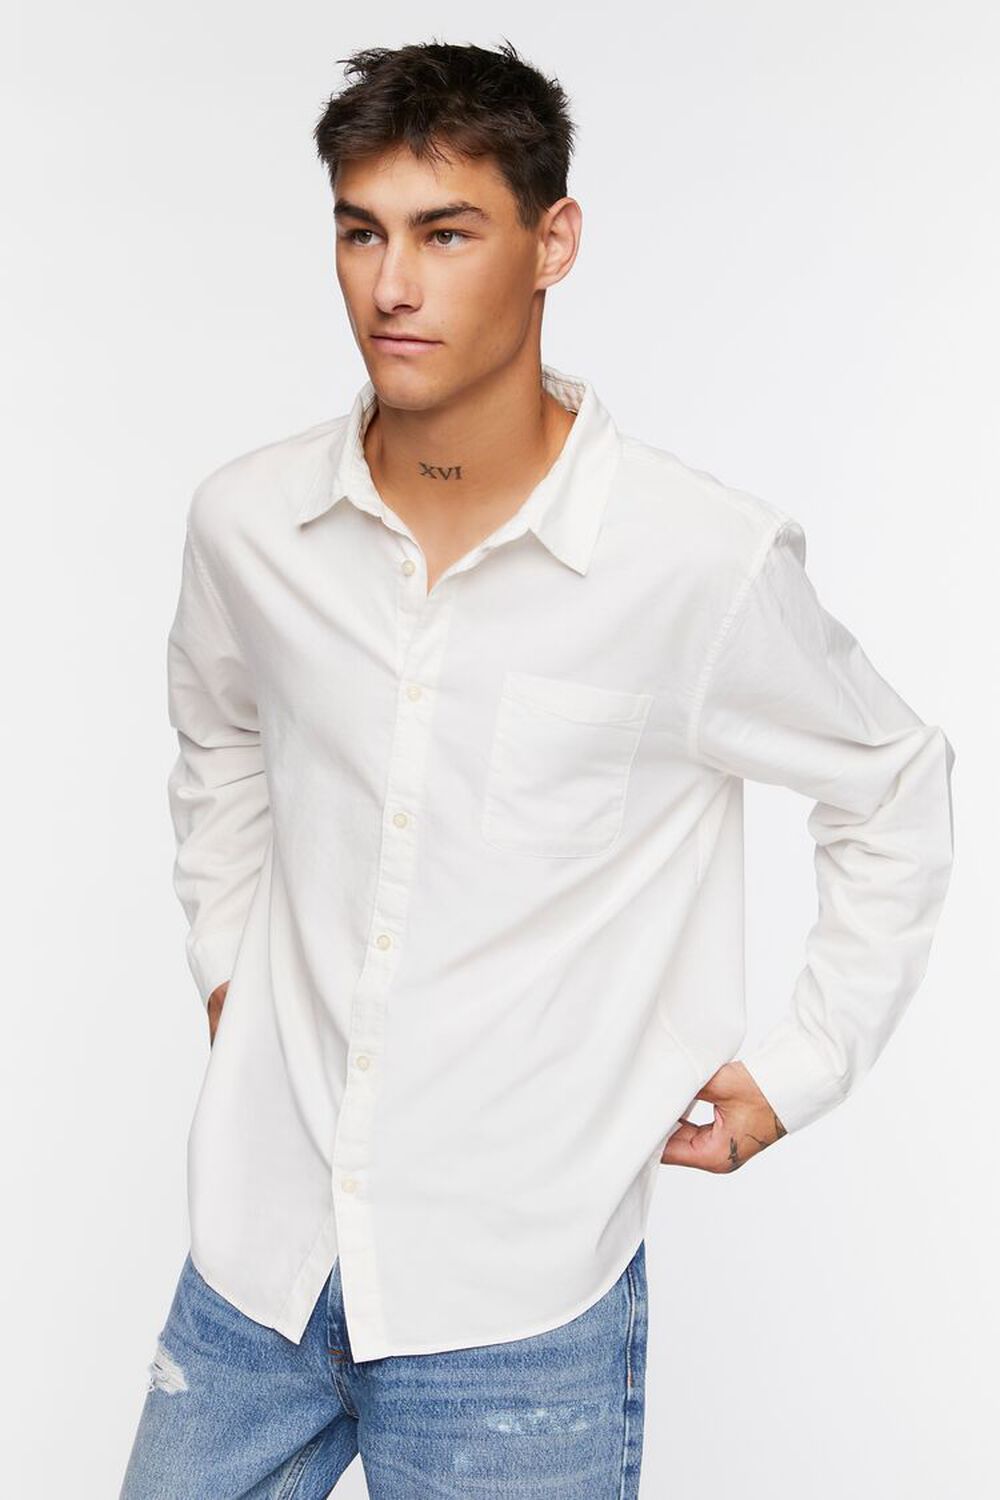 WHITE Cotton Button-Up Shirt, image 1